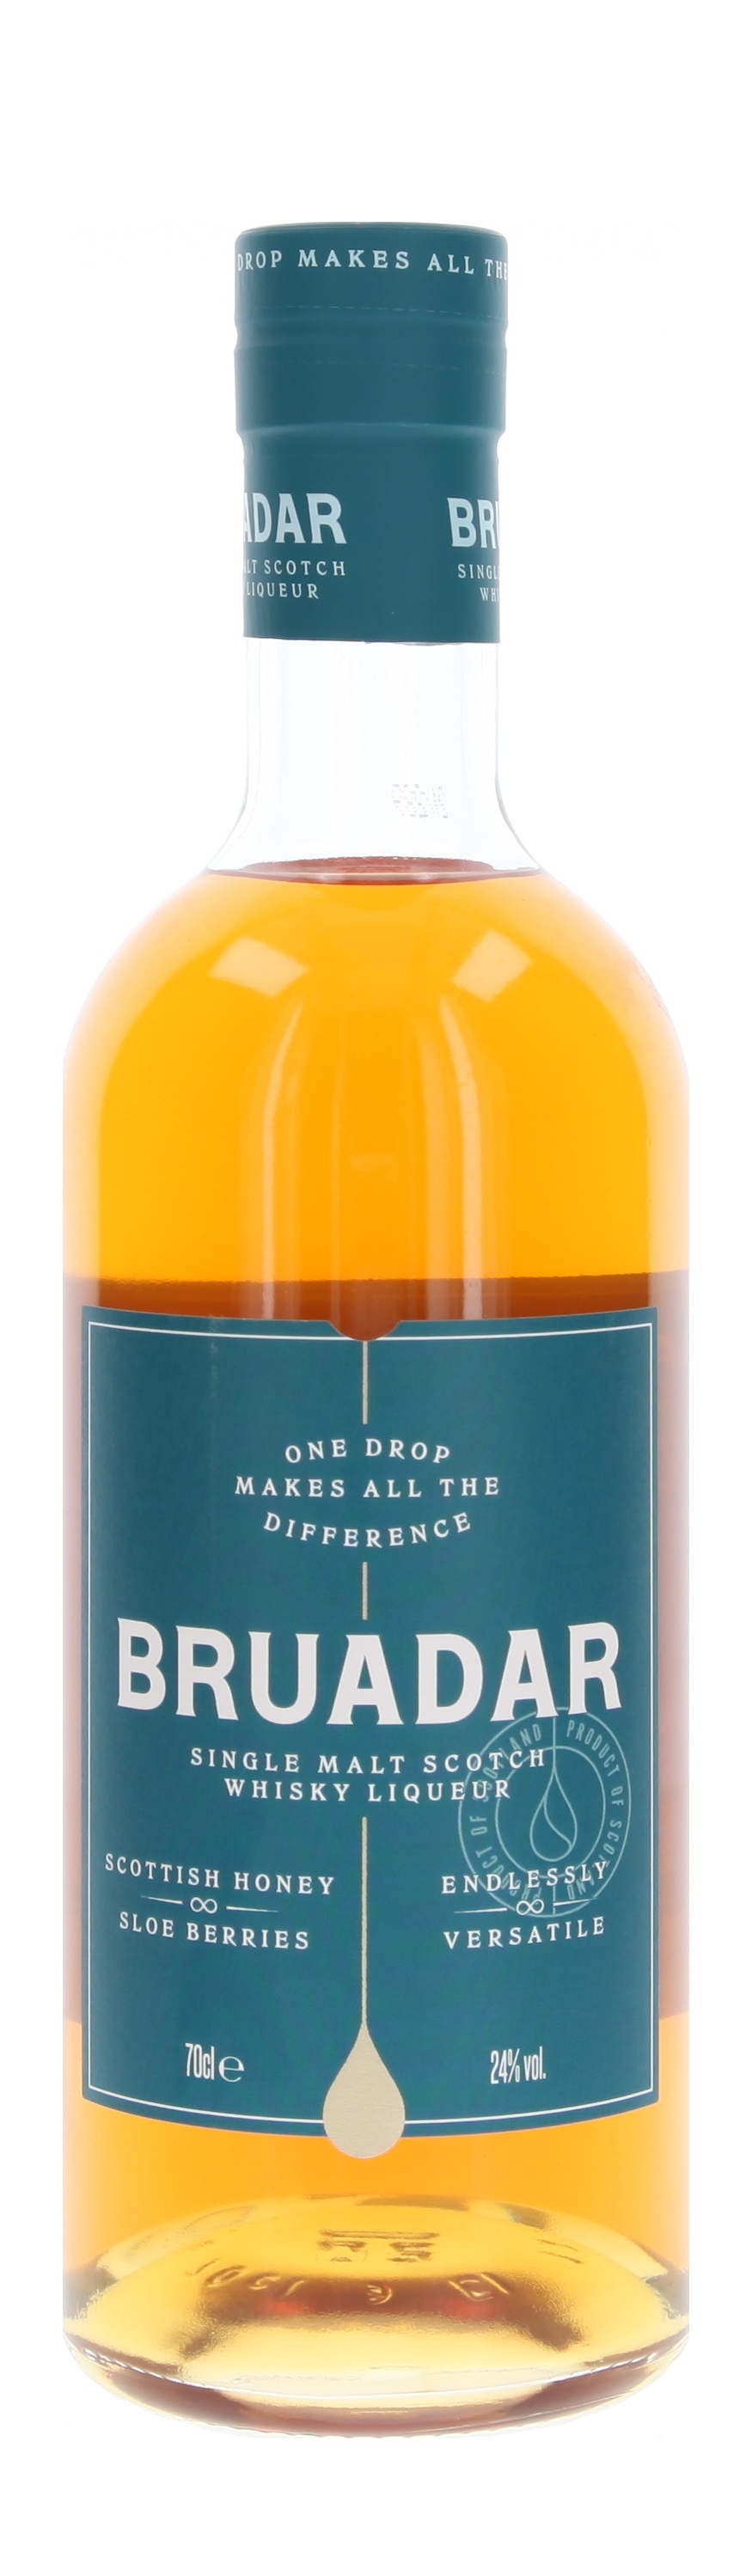 Austria store Whisky.de the » | online To Bruadar